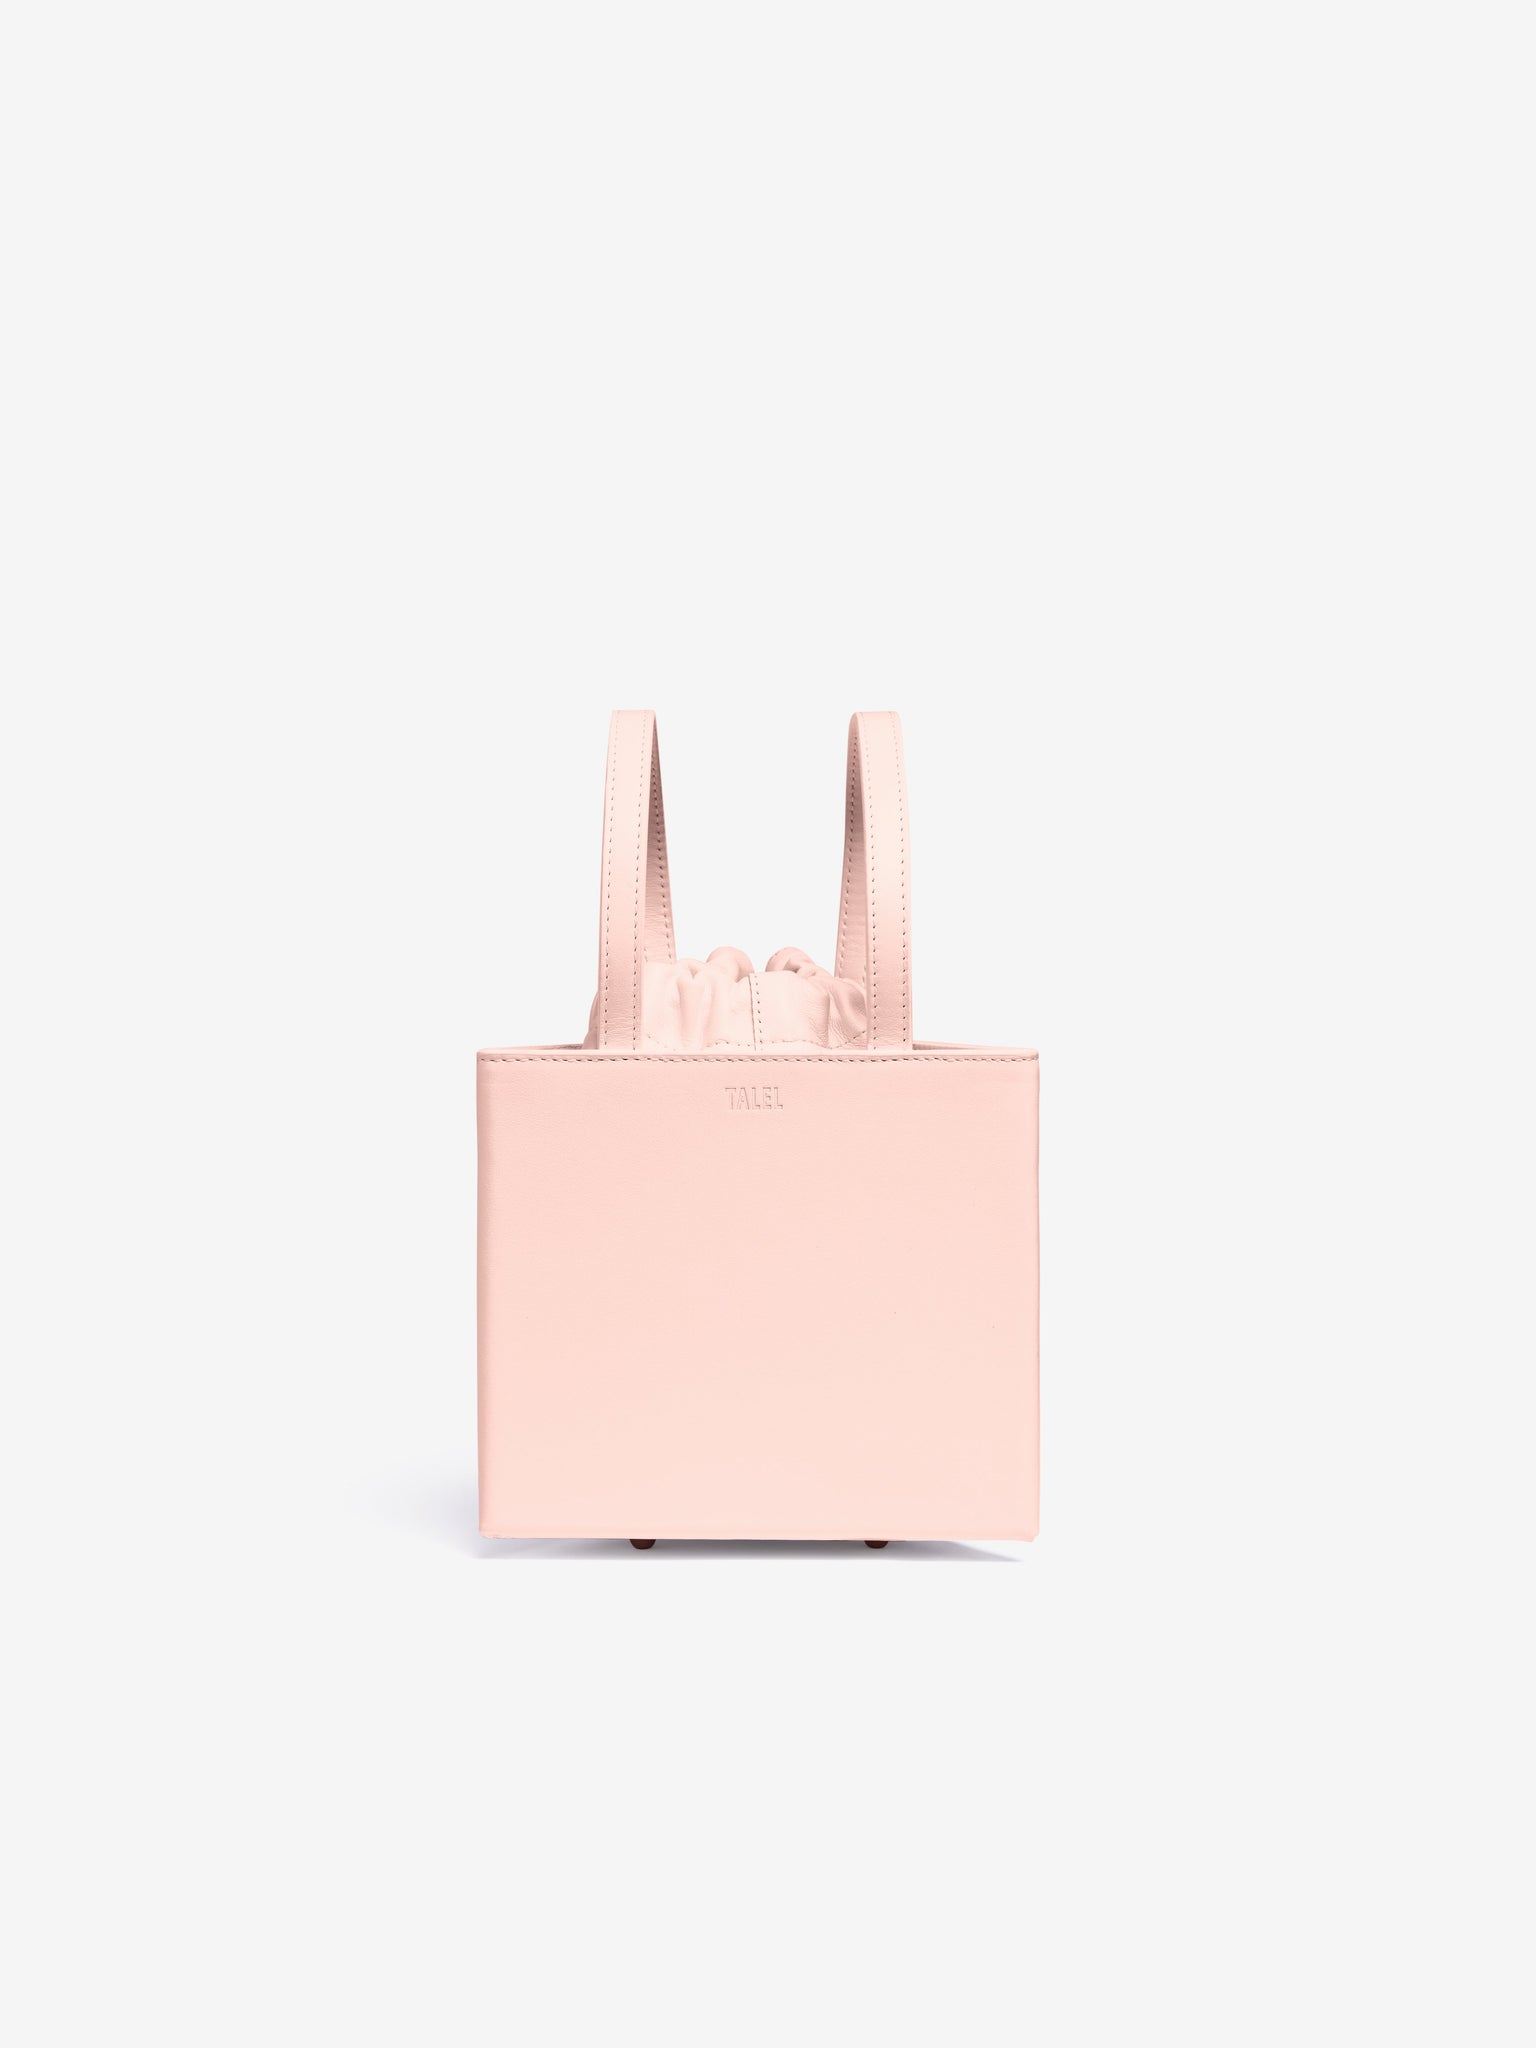 Talel Paris Bags Triangle Bag Light Pink M 